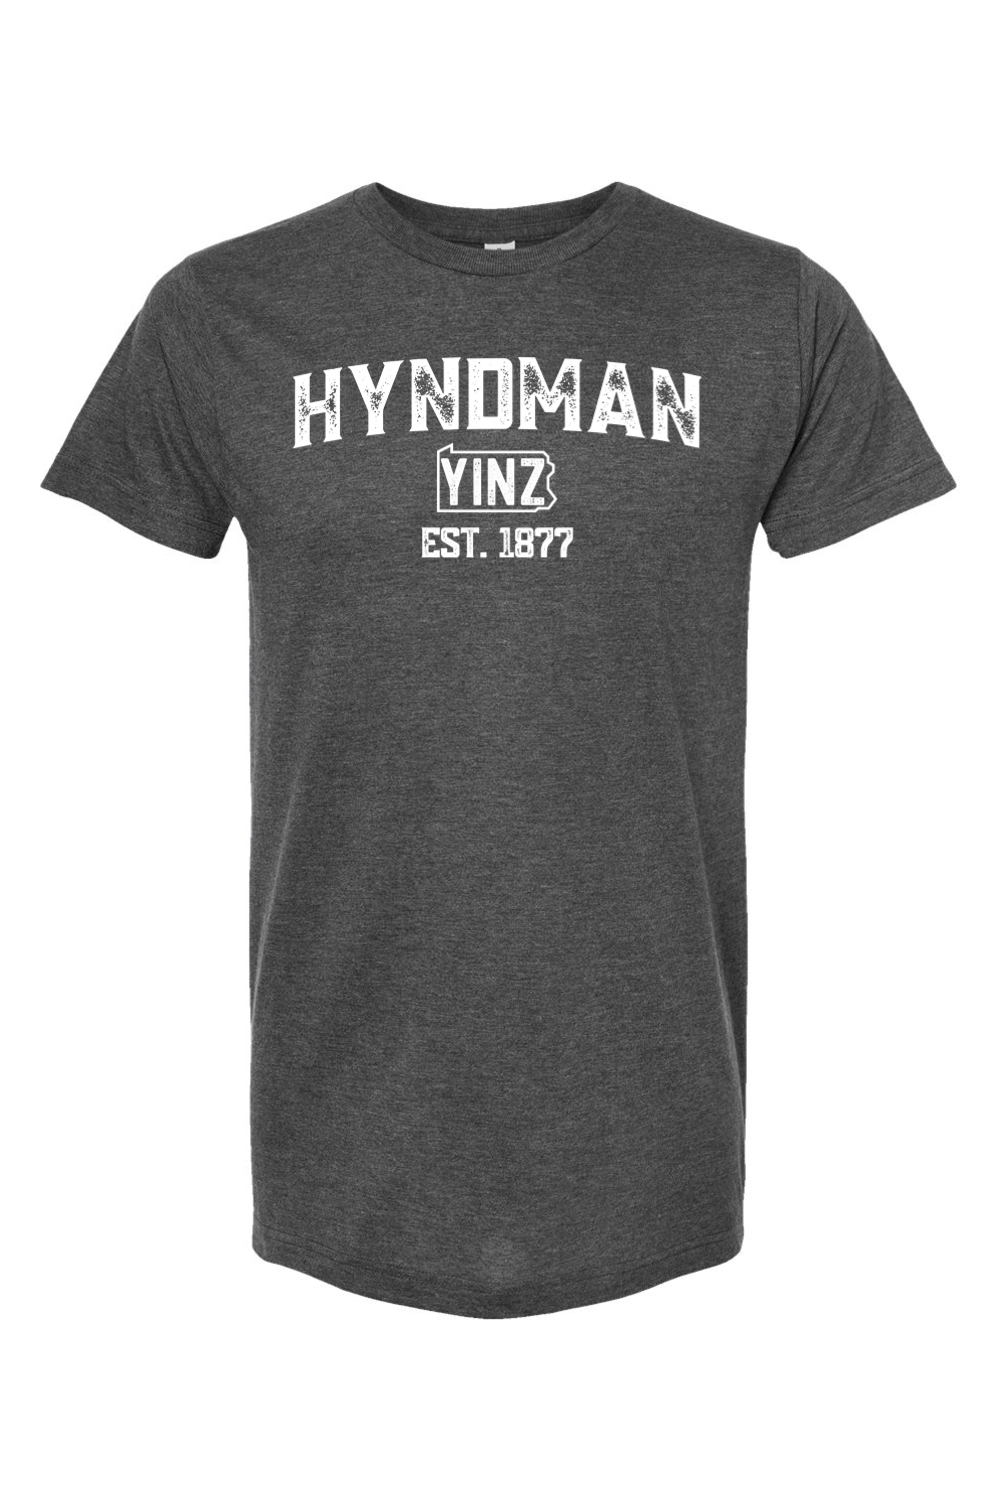 Hyndman Yinzylvania - Yinzylvania